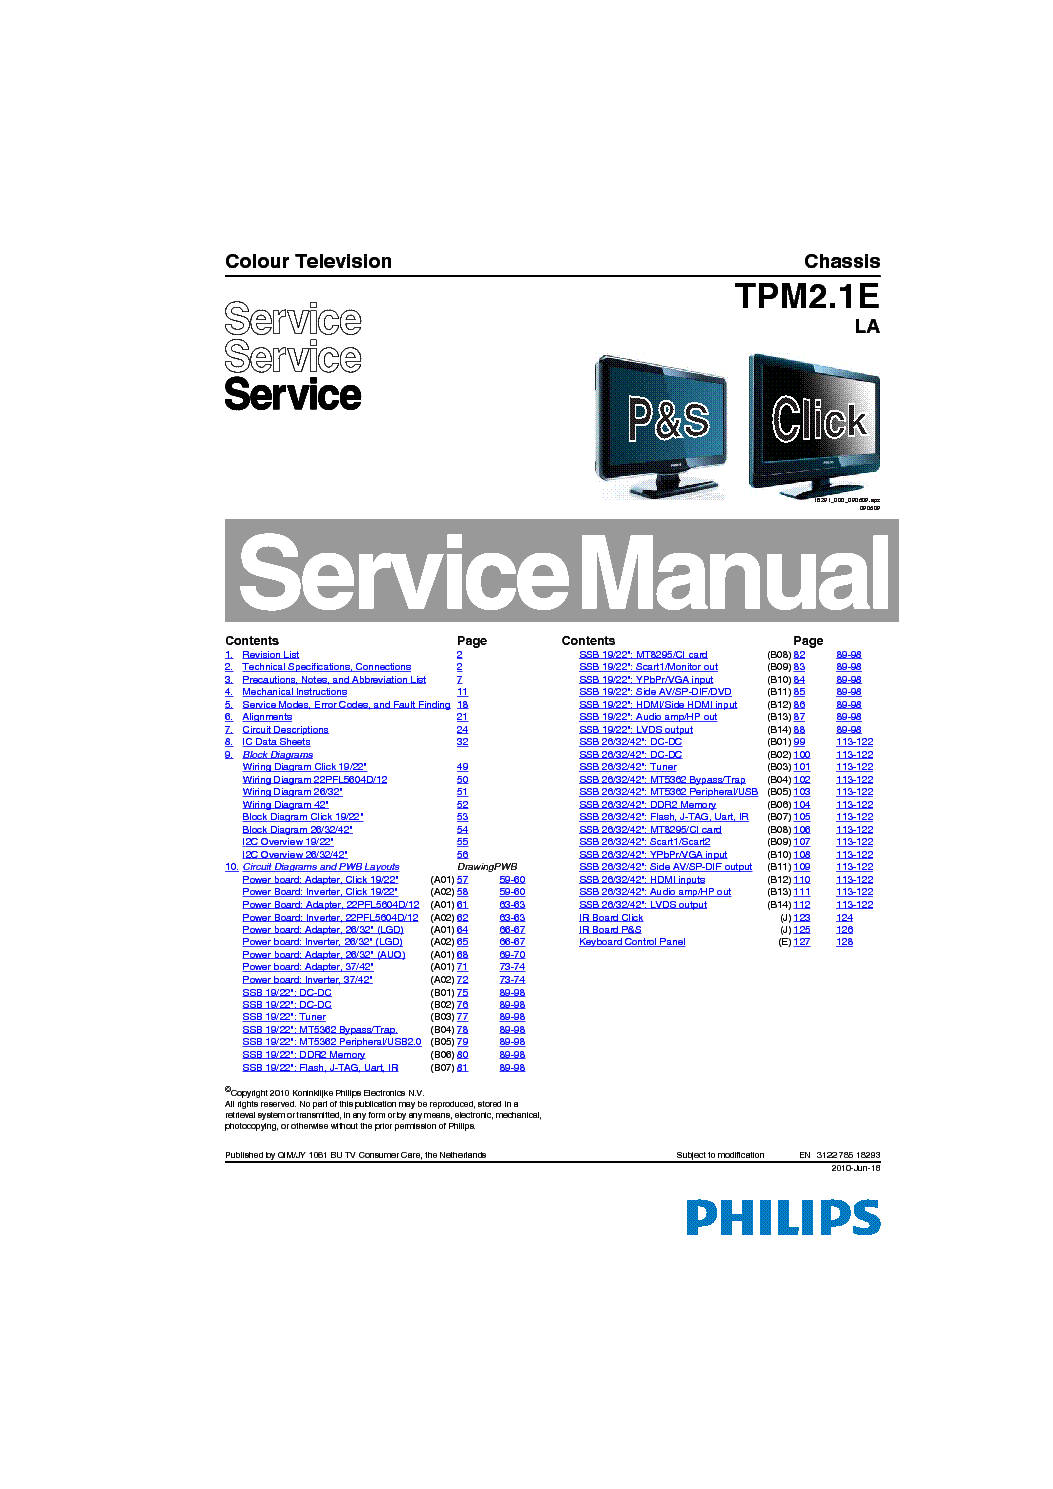 PHILIPS 19HFL3331D 10 CHASSIS TPM2.1E LA service manual (1st page)